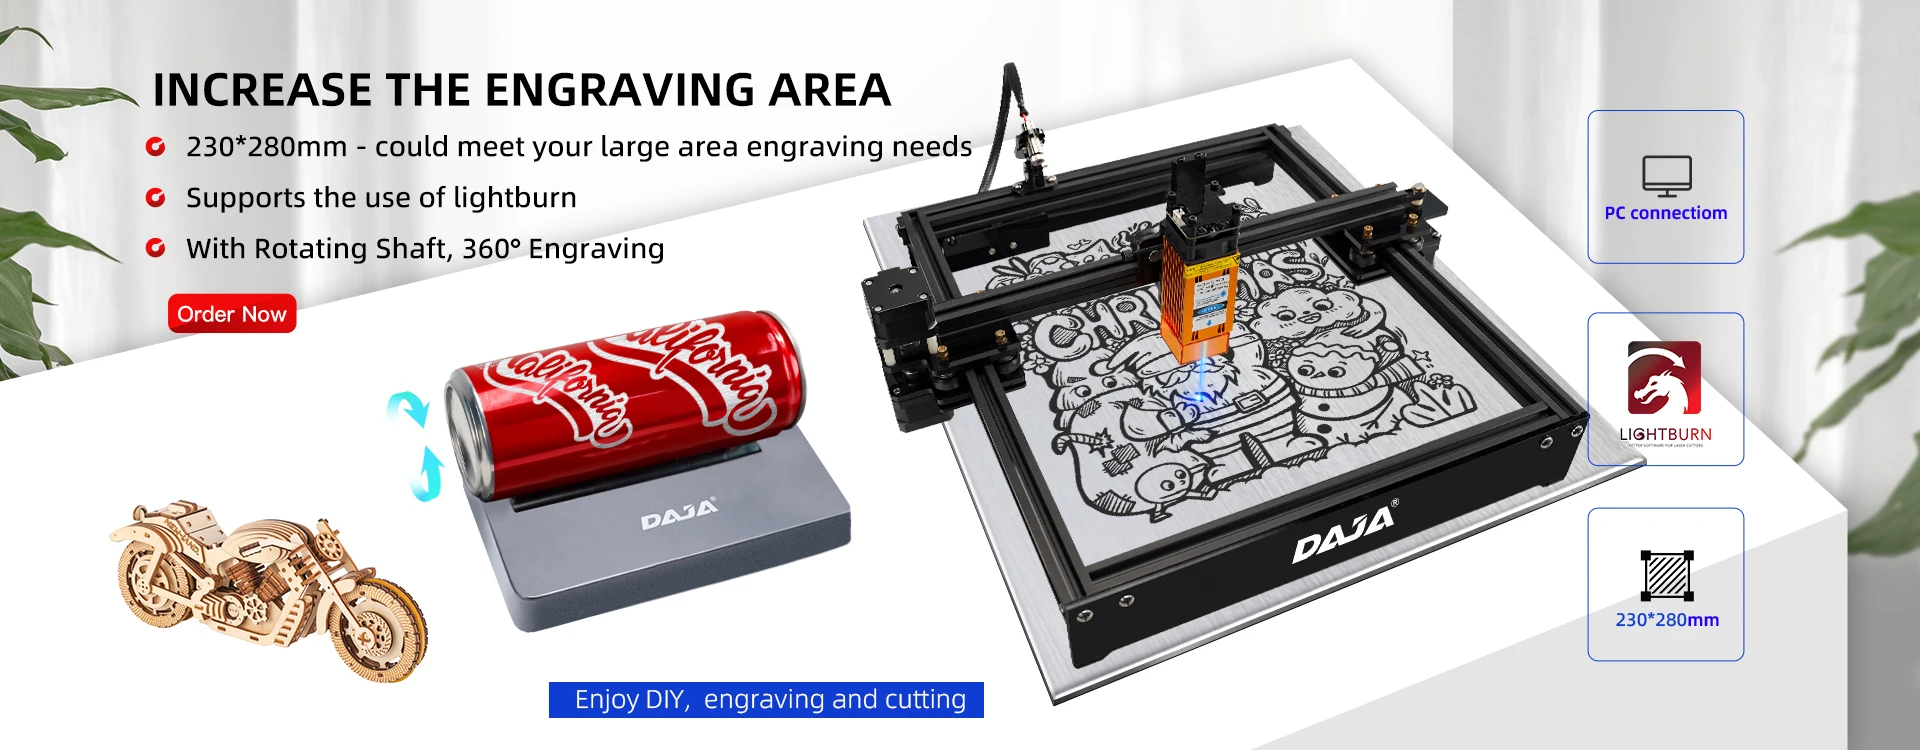 DAJA M1 Pro Fiber Laser Engraver Portable Business Laser Marking Machine  for Fast Precise Engraving Plastic Leather All Metals